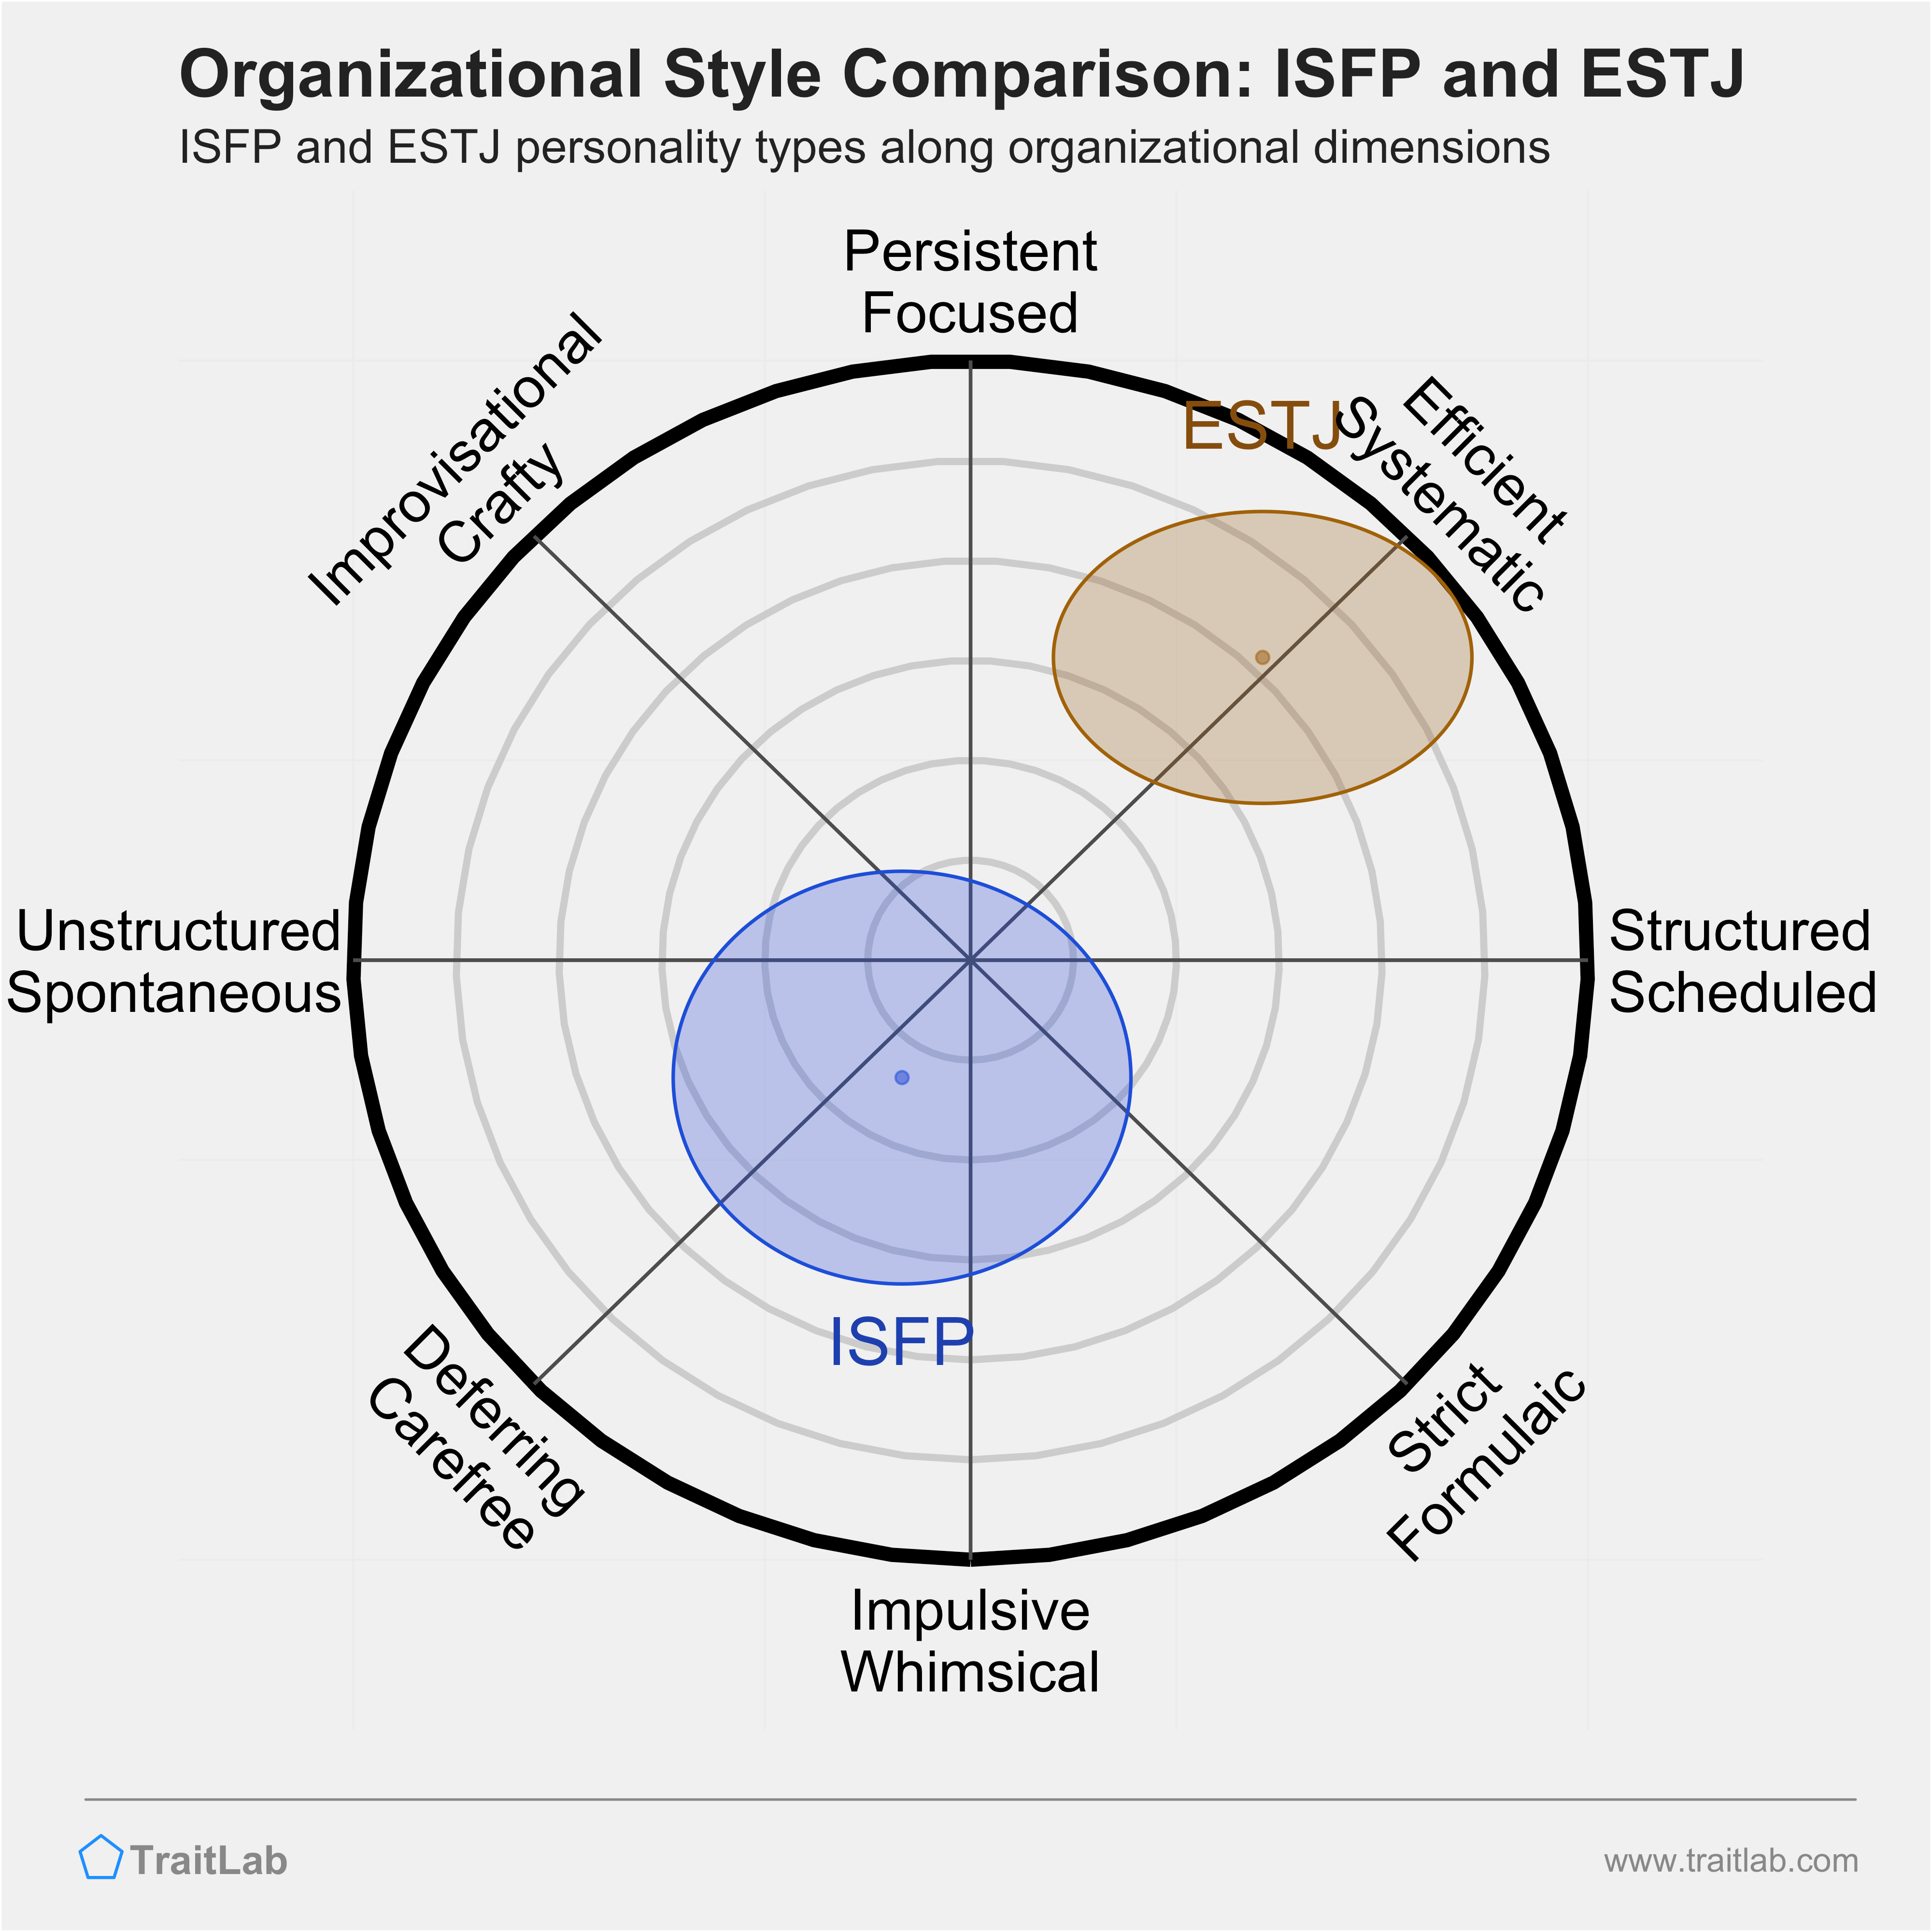 ISFP and ESTJ comparison across organizational dimensions